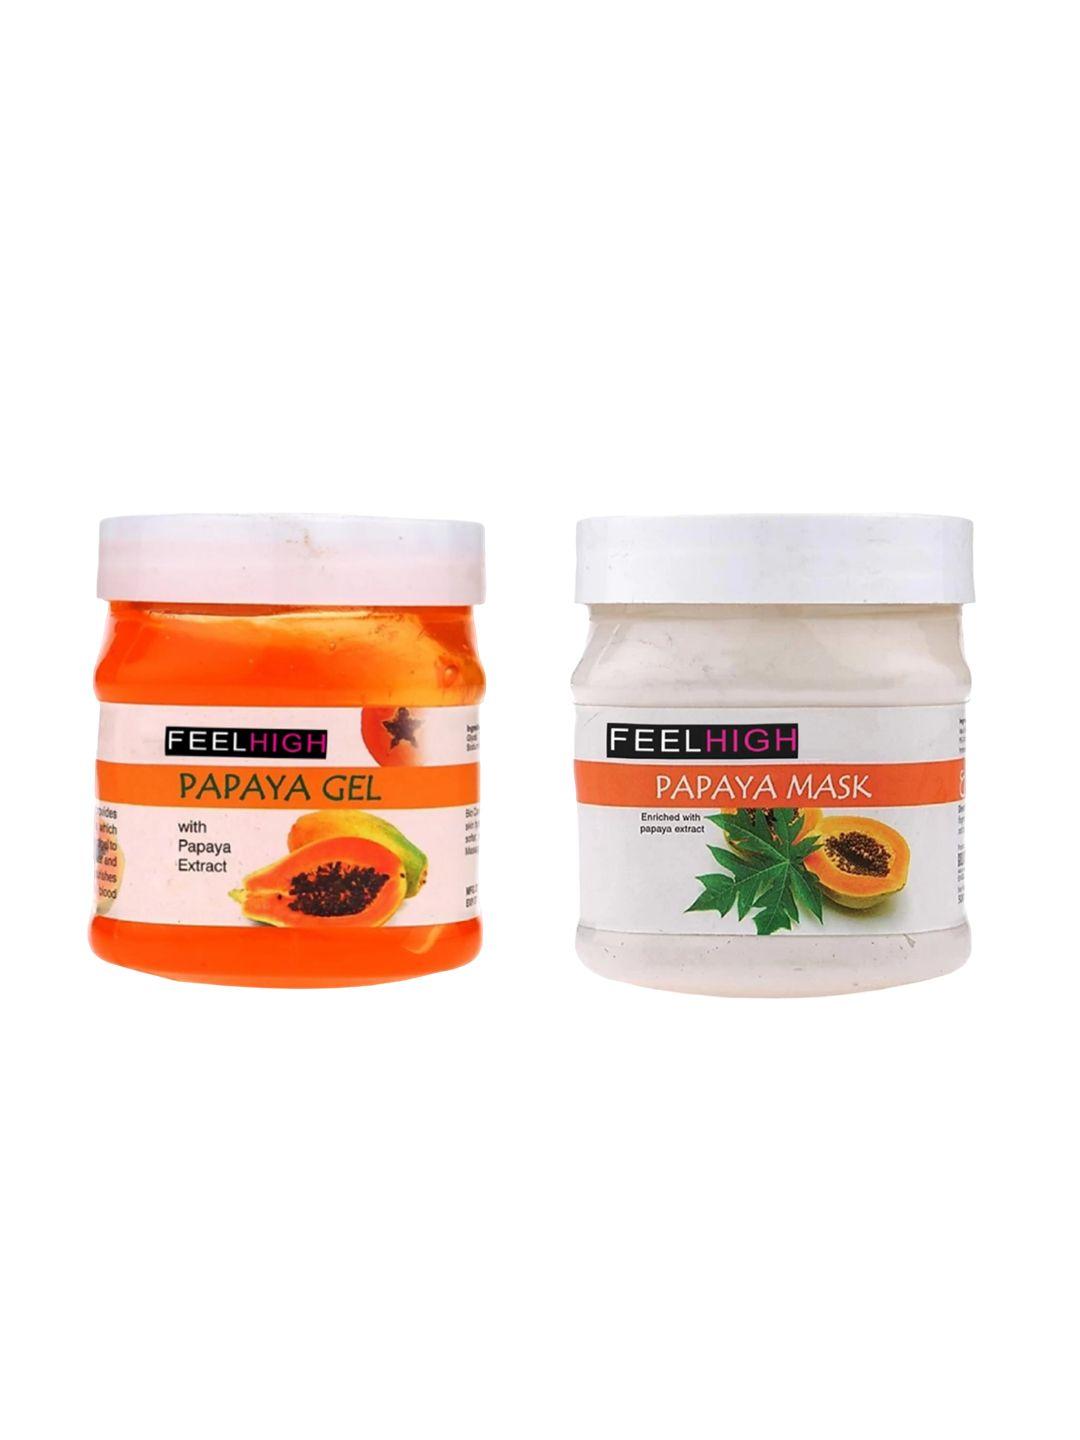 feelhigh set of 2 papaya mask & gel facial kit 500ml each